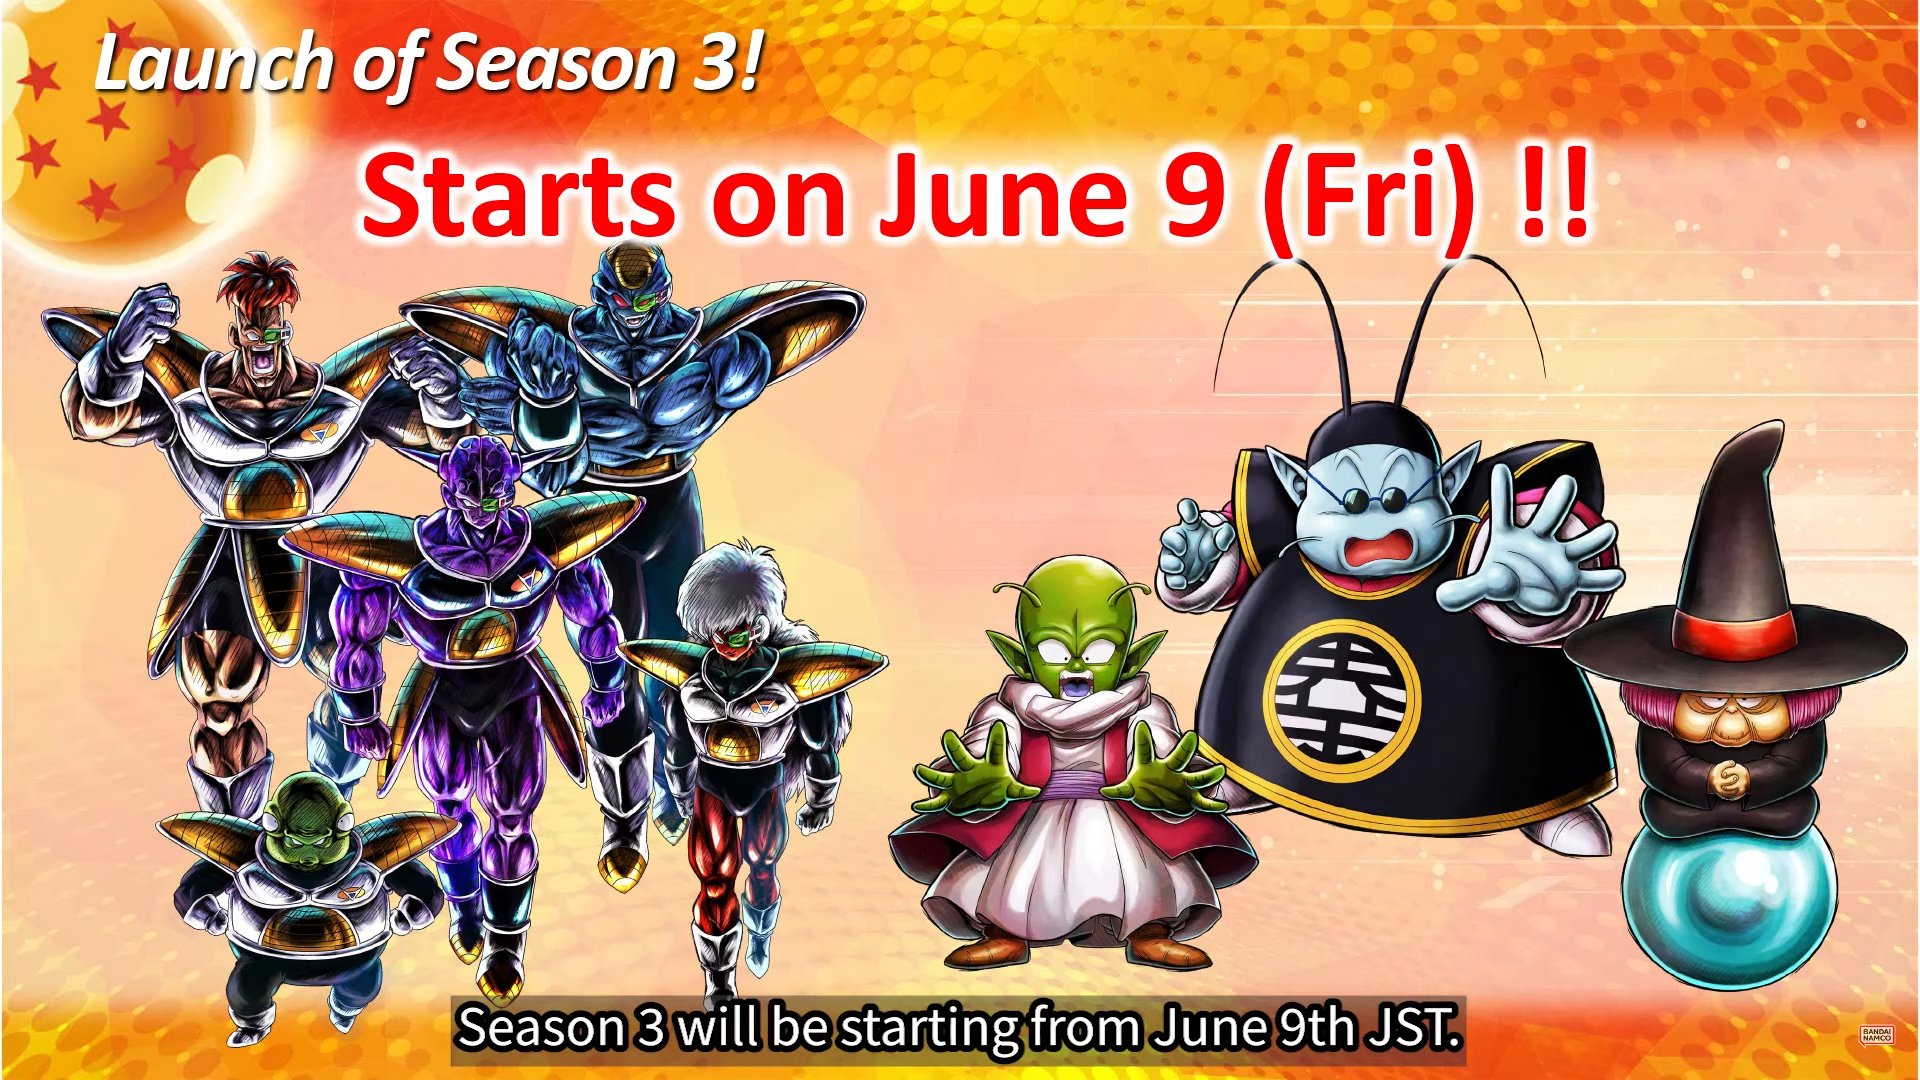 Dragon Ball: The Breakers Season 3 launches June 9 - Gematsu